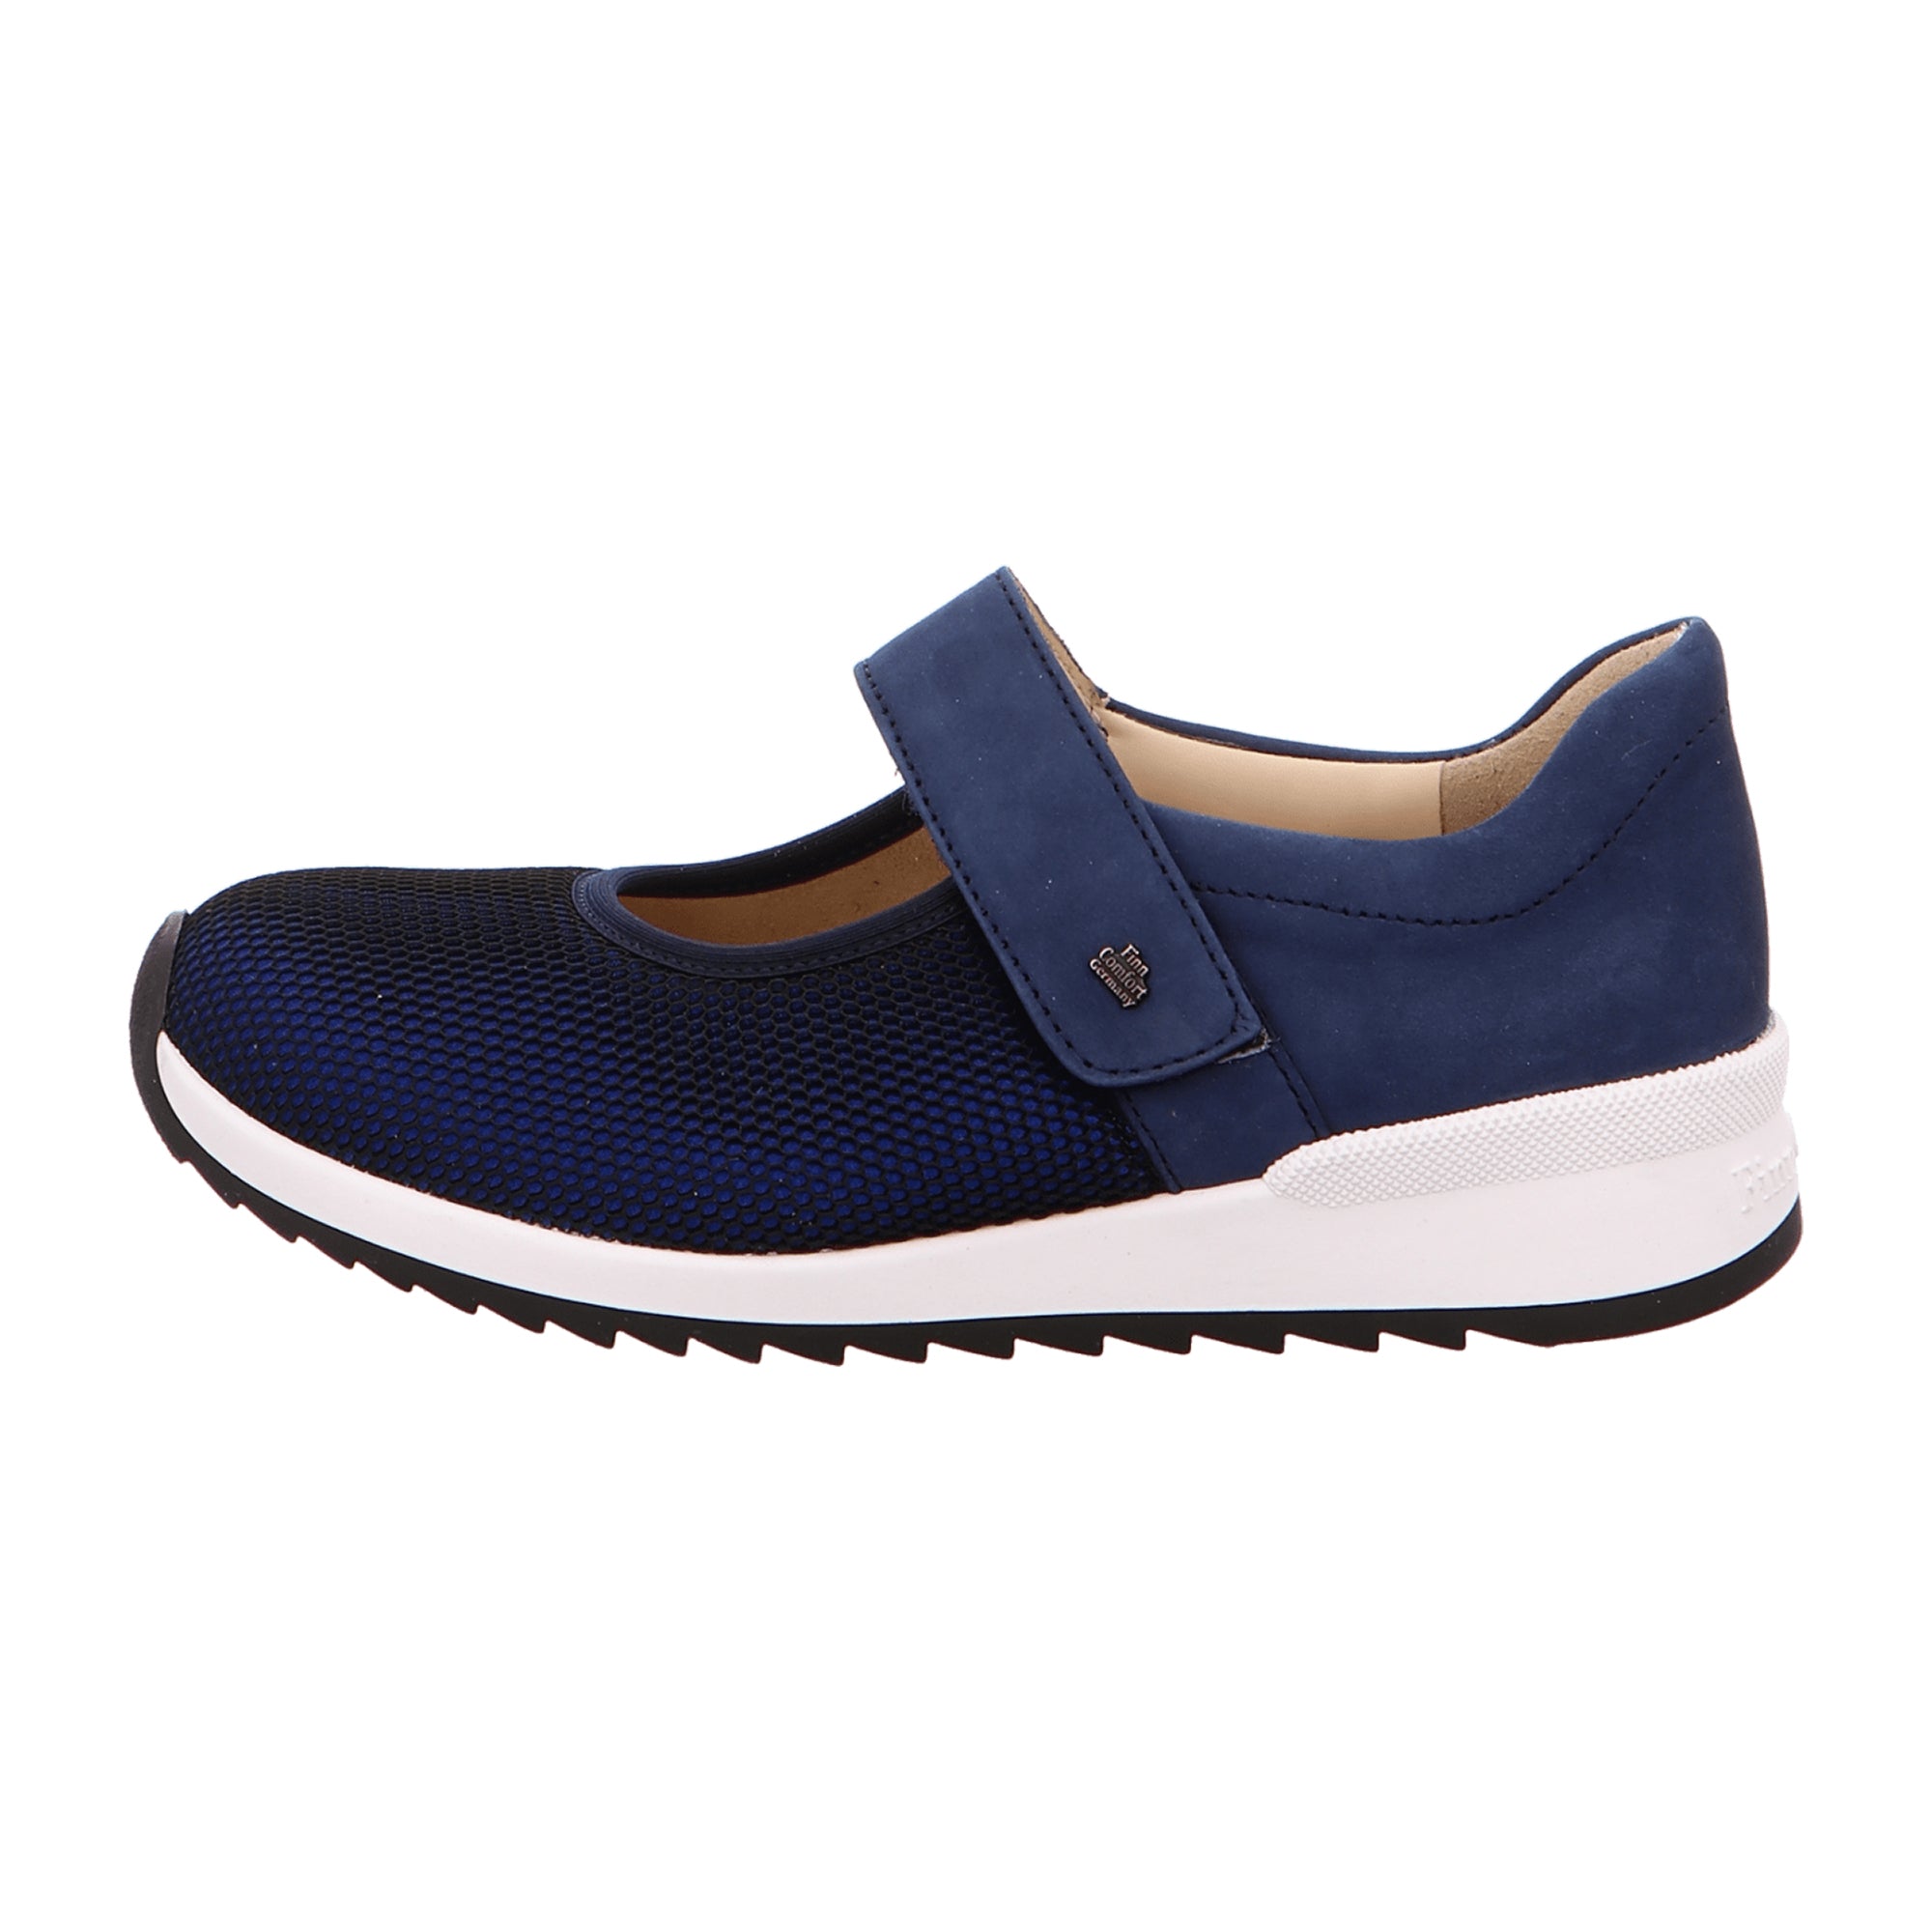 Finn Comfort Assenza Atoll Women's Comfort Shoes, Blue - Stylish & Durable